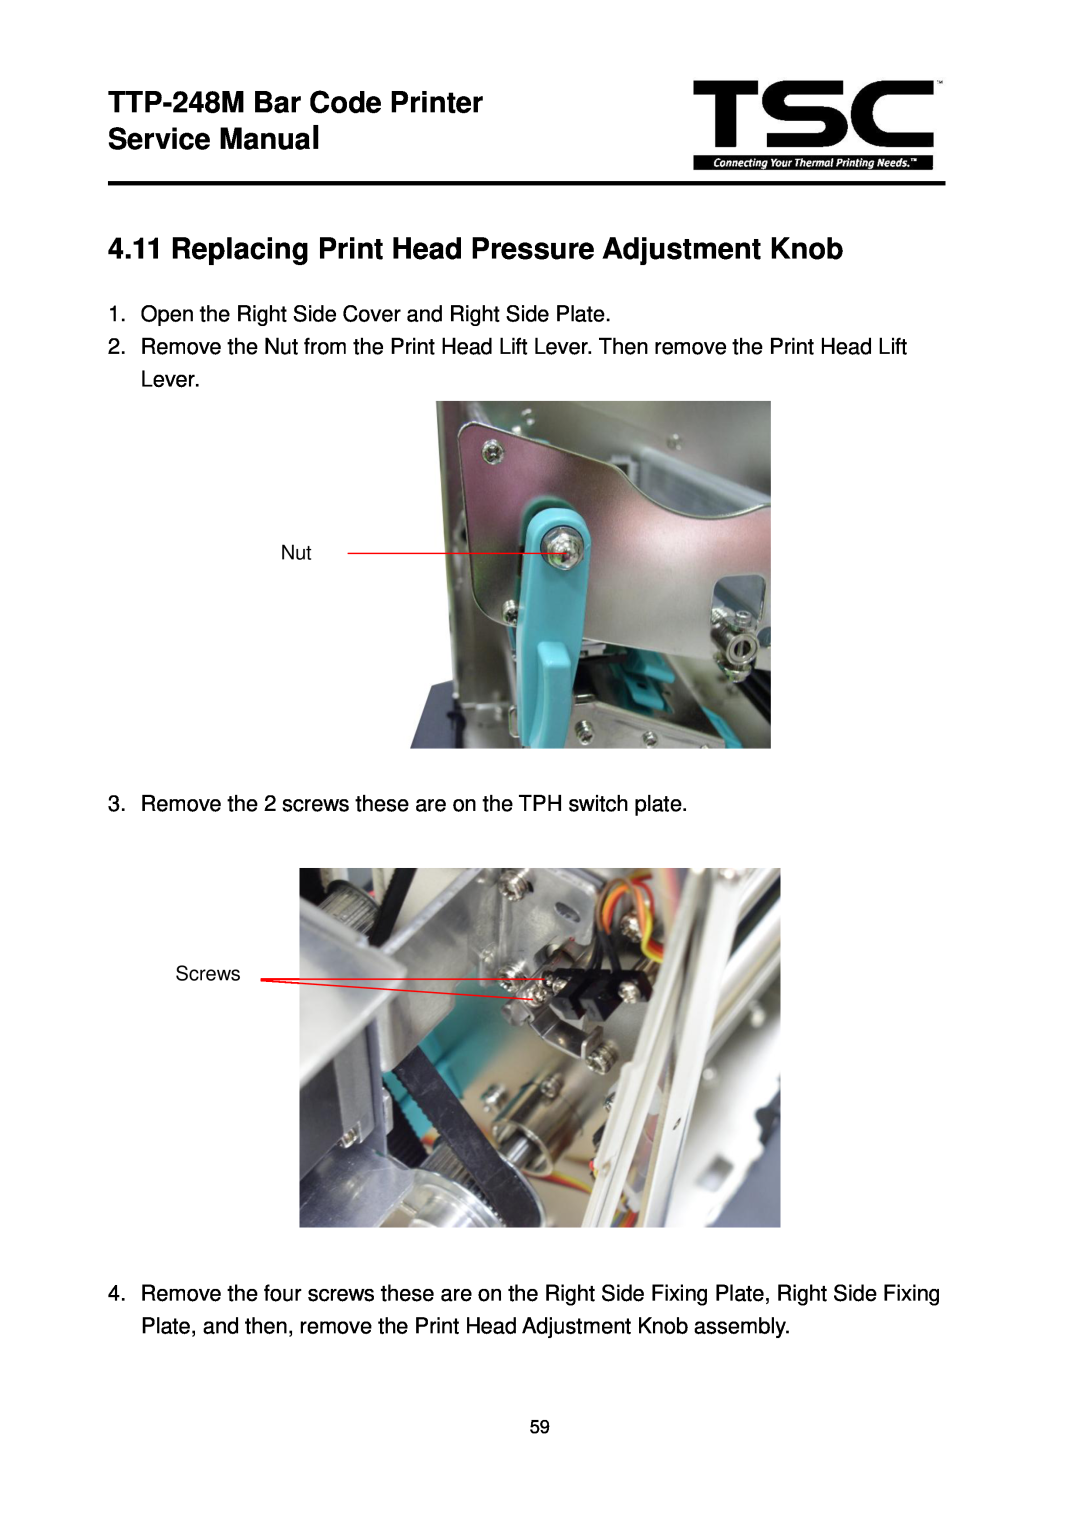 The Speaker Company TTP 248M Replacing Print Head Pressure Adjustment Knob, TTP-248M Bar Code Printer Service Manual 